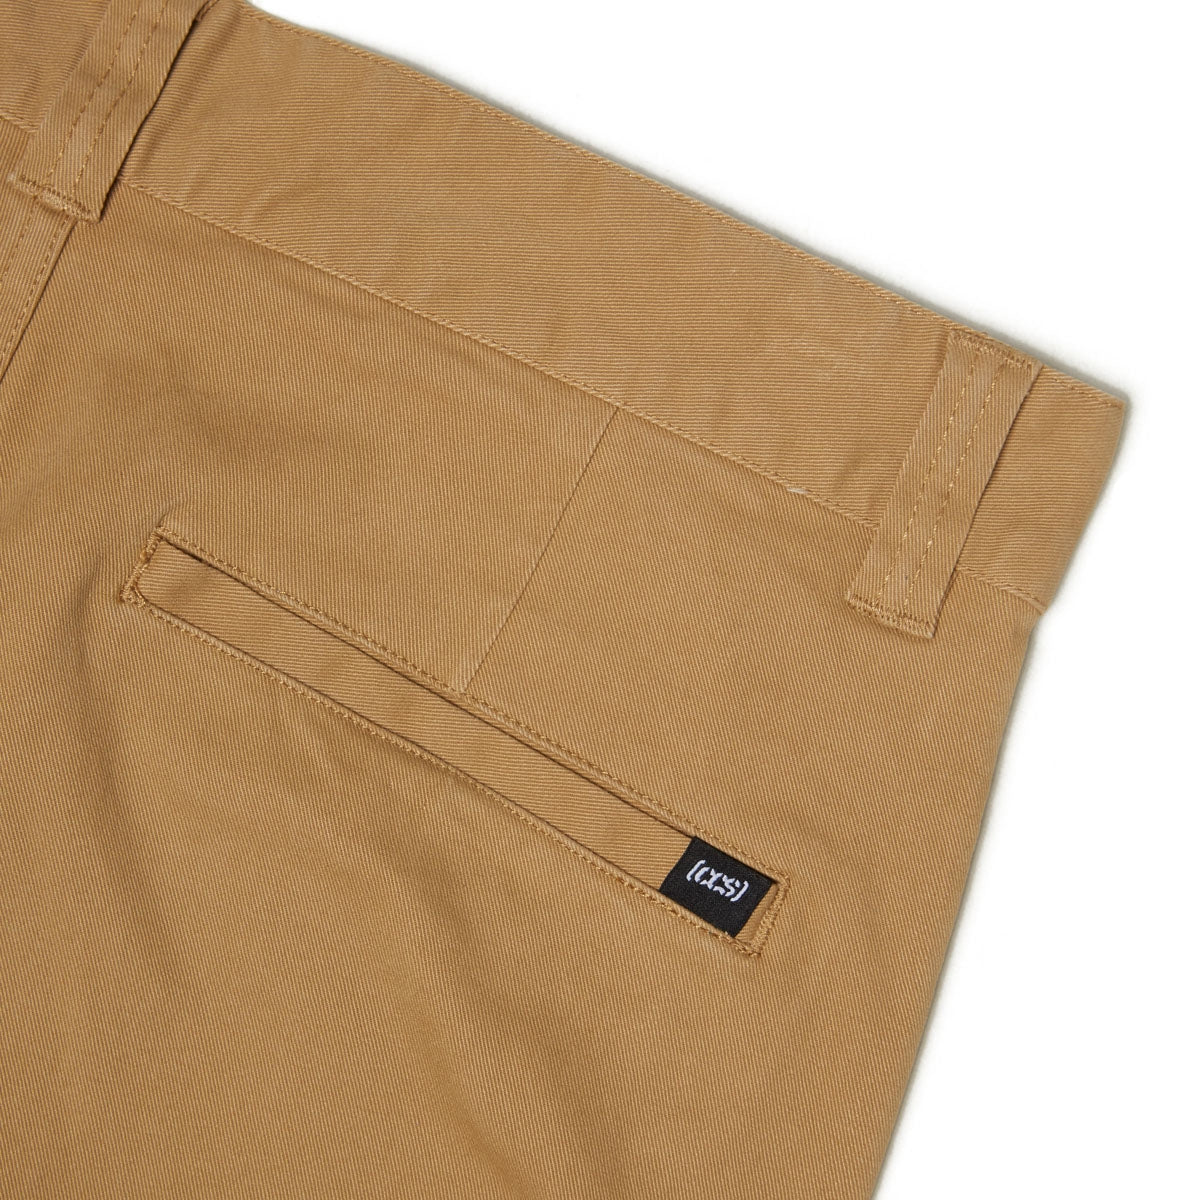 CCS Standard Plus Relaxed Chino Pants - Khaki image 6